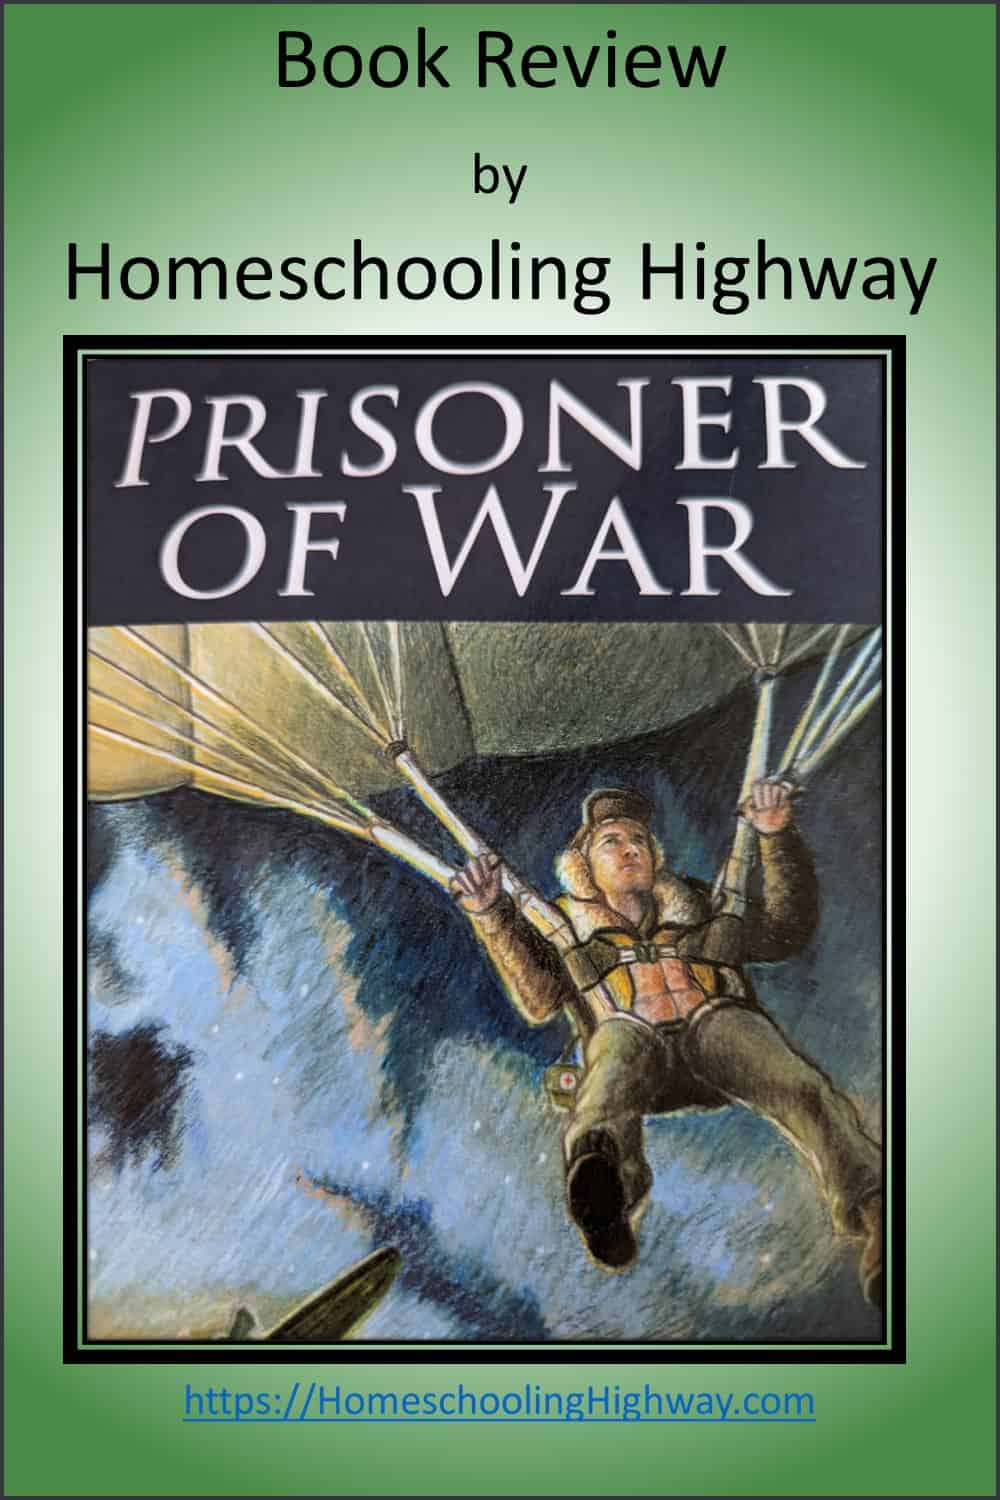 Prisoner of War. Written by Kinsey M. Rockett. Reviewed by HomeschoolingHighway.com